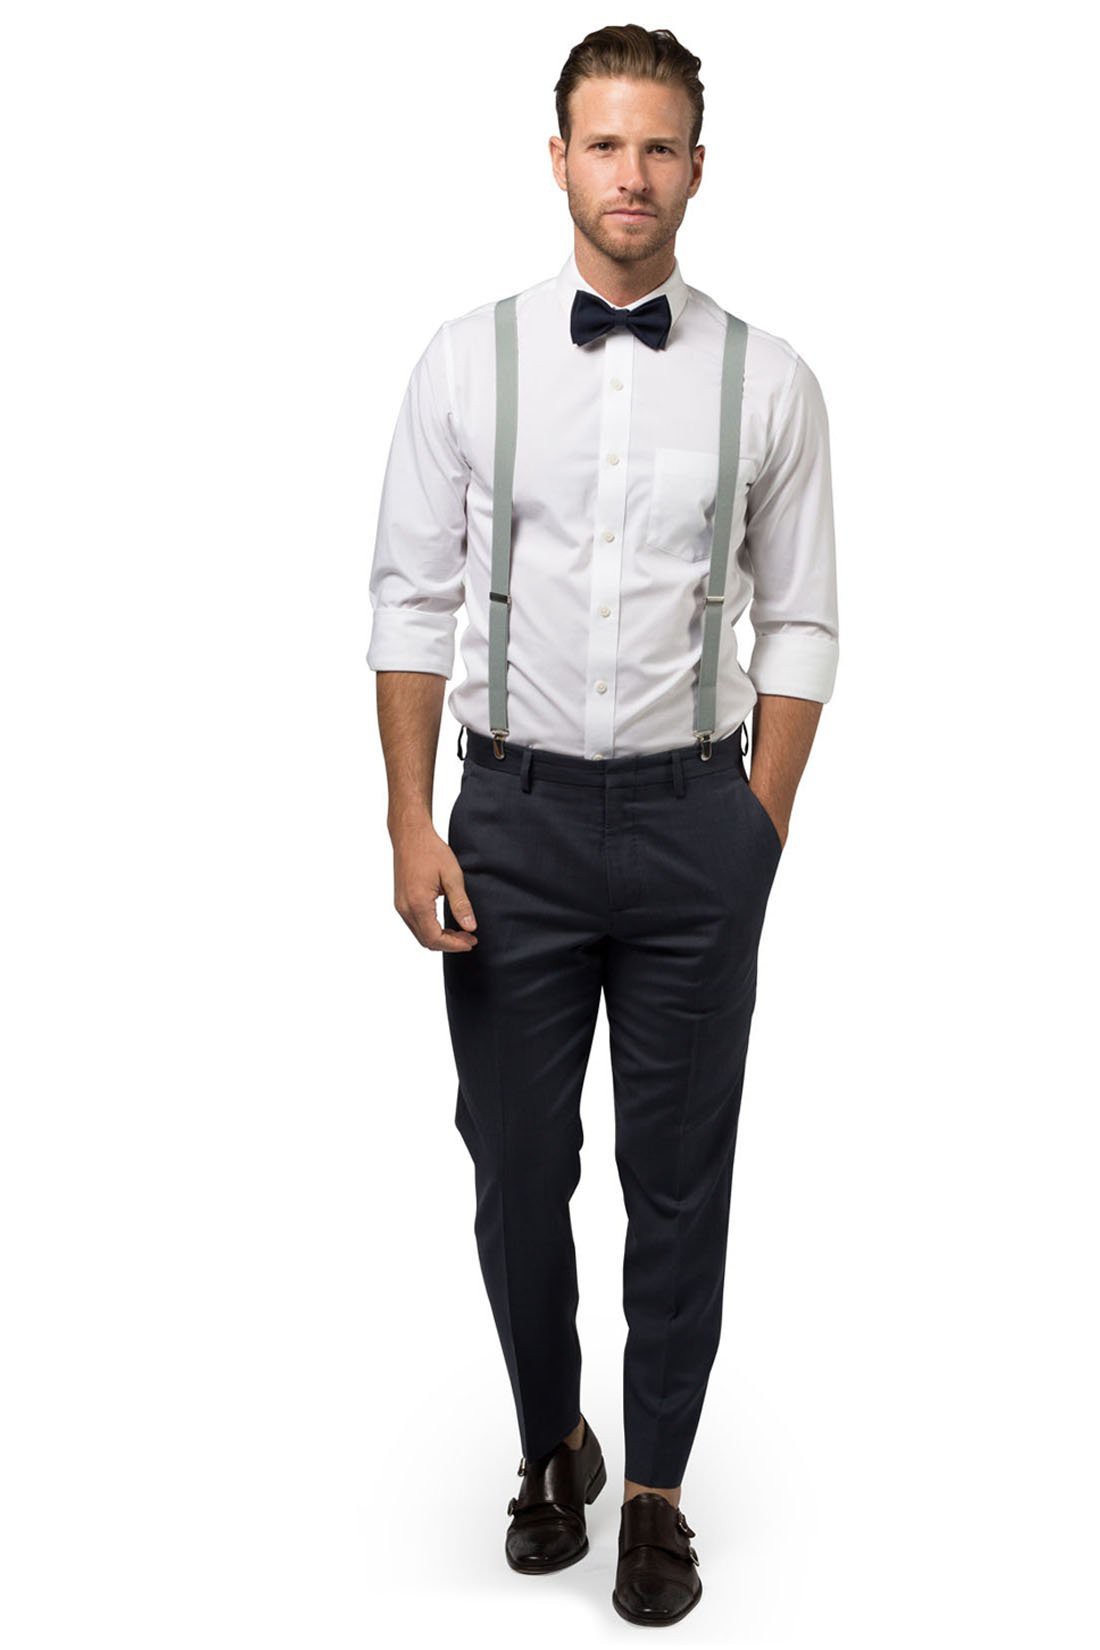 Light Gray Suspenders & Navy Bow Tie